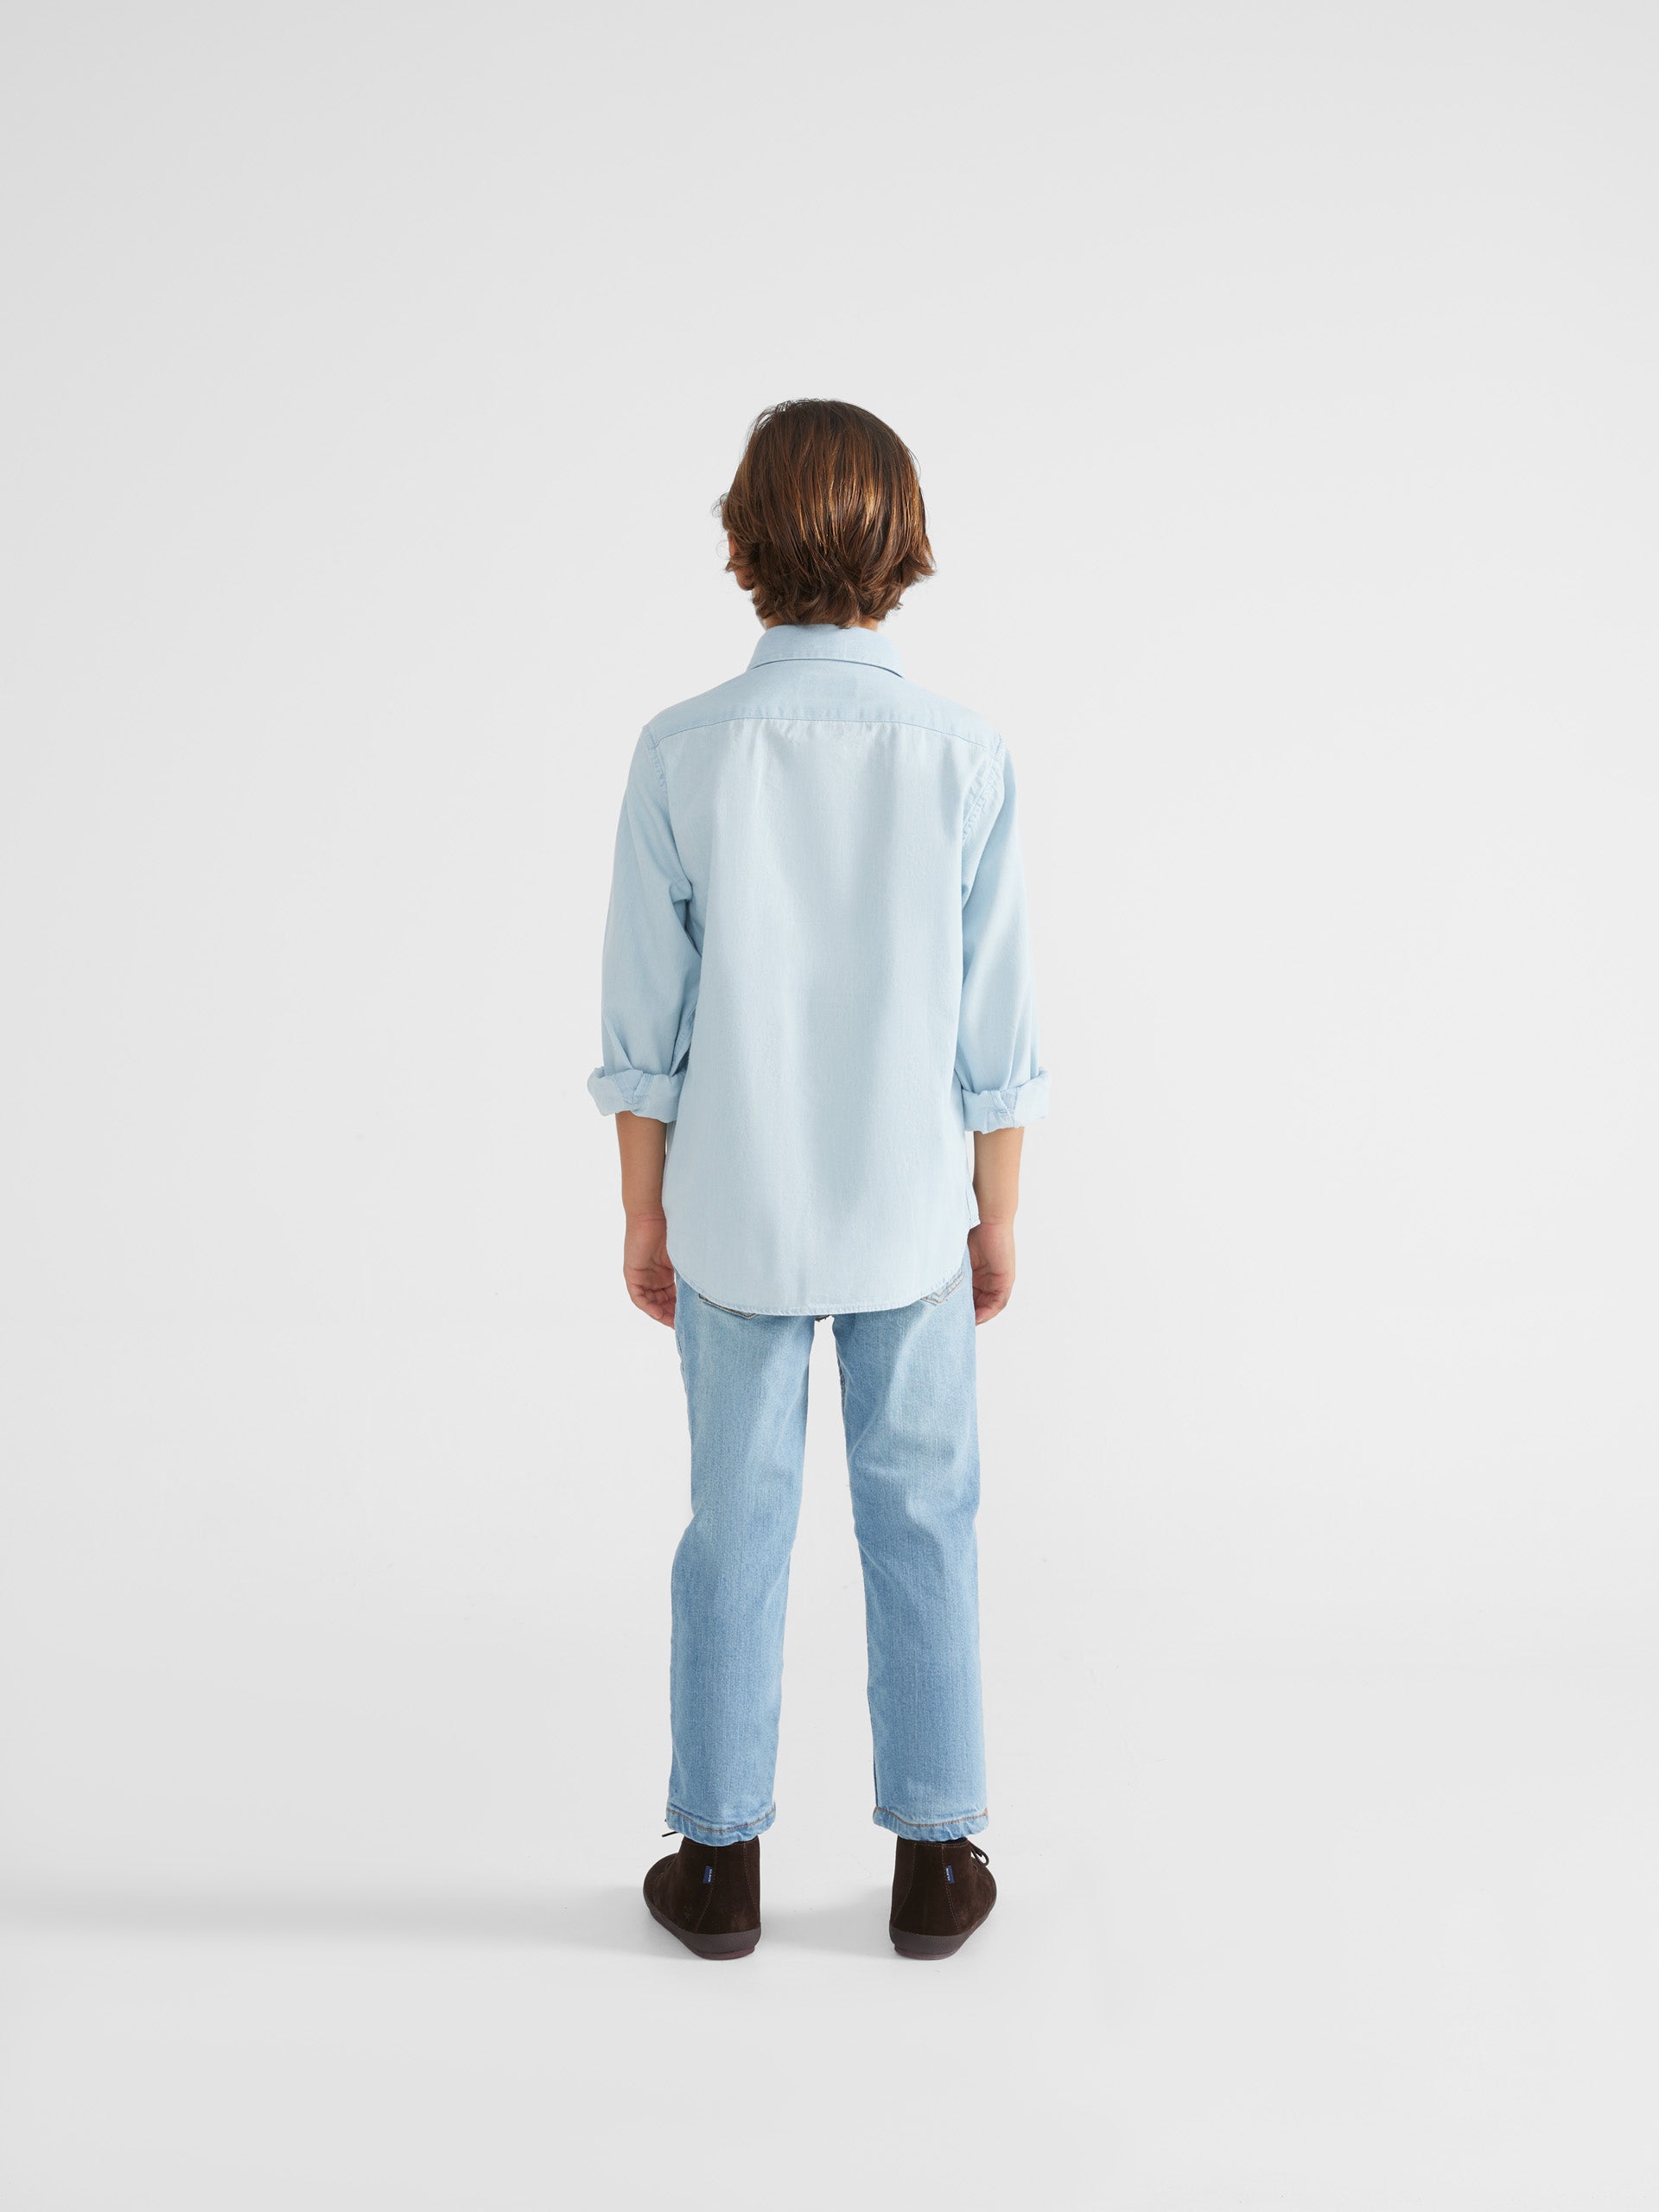 T-shirt bleu clair en jean enfant